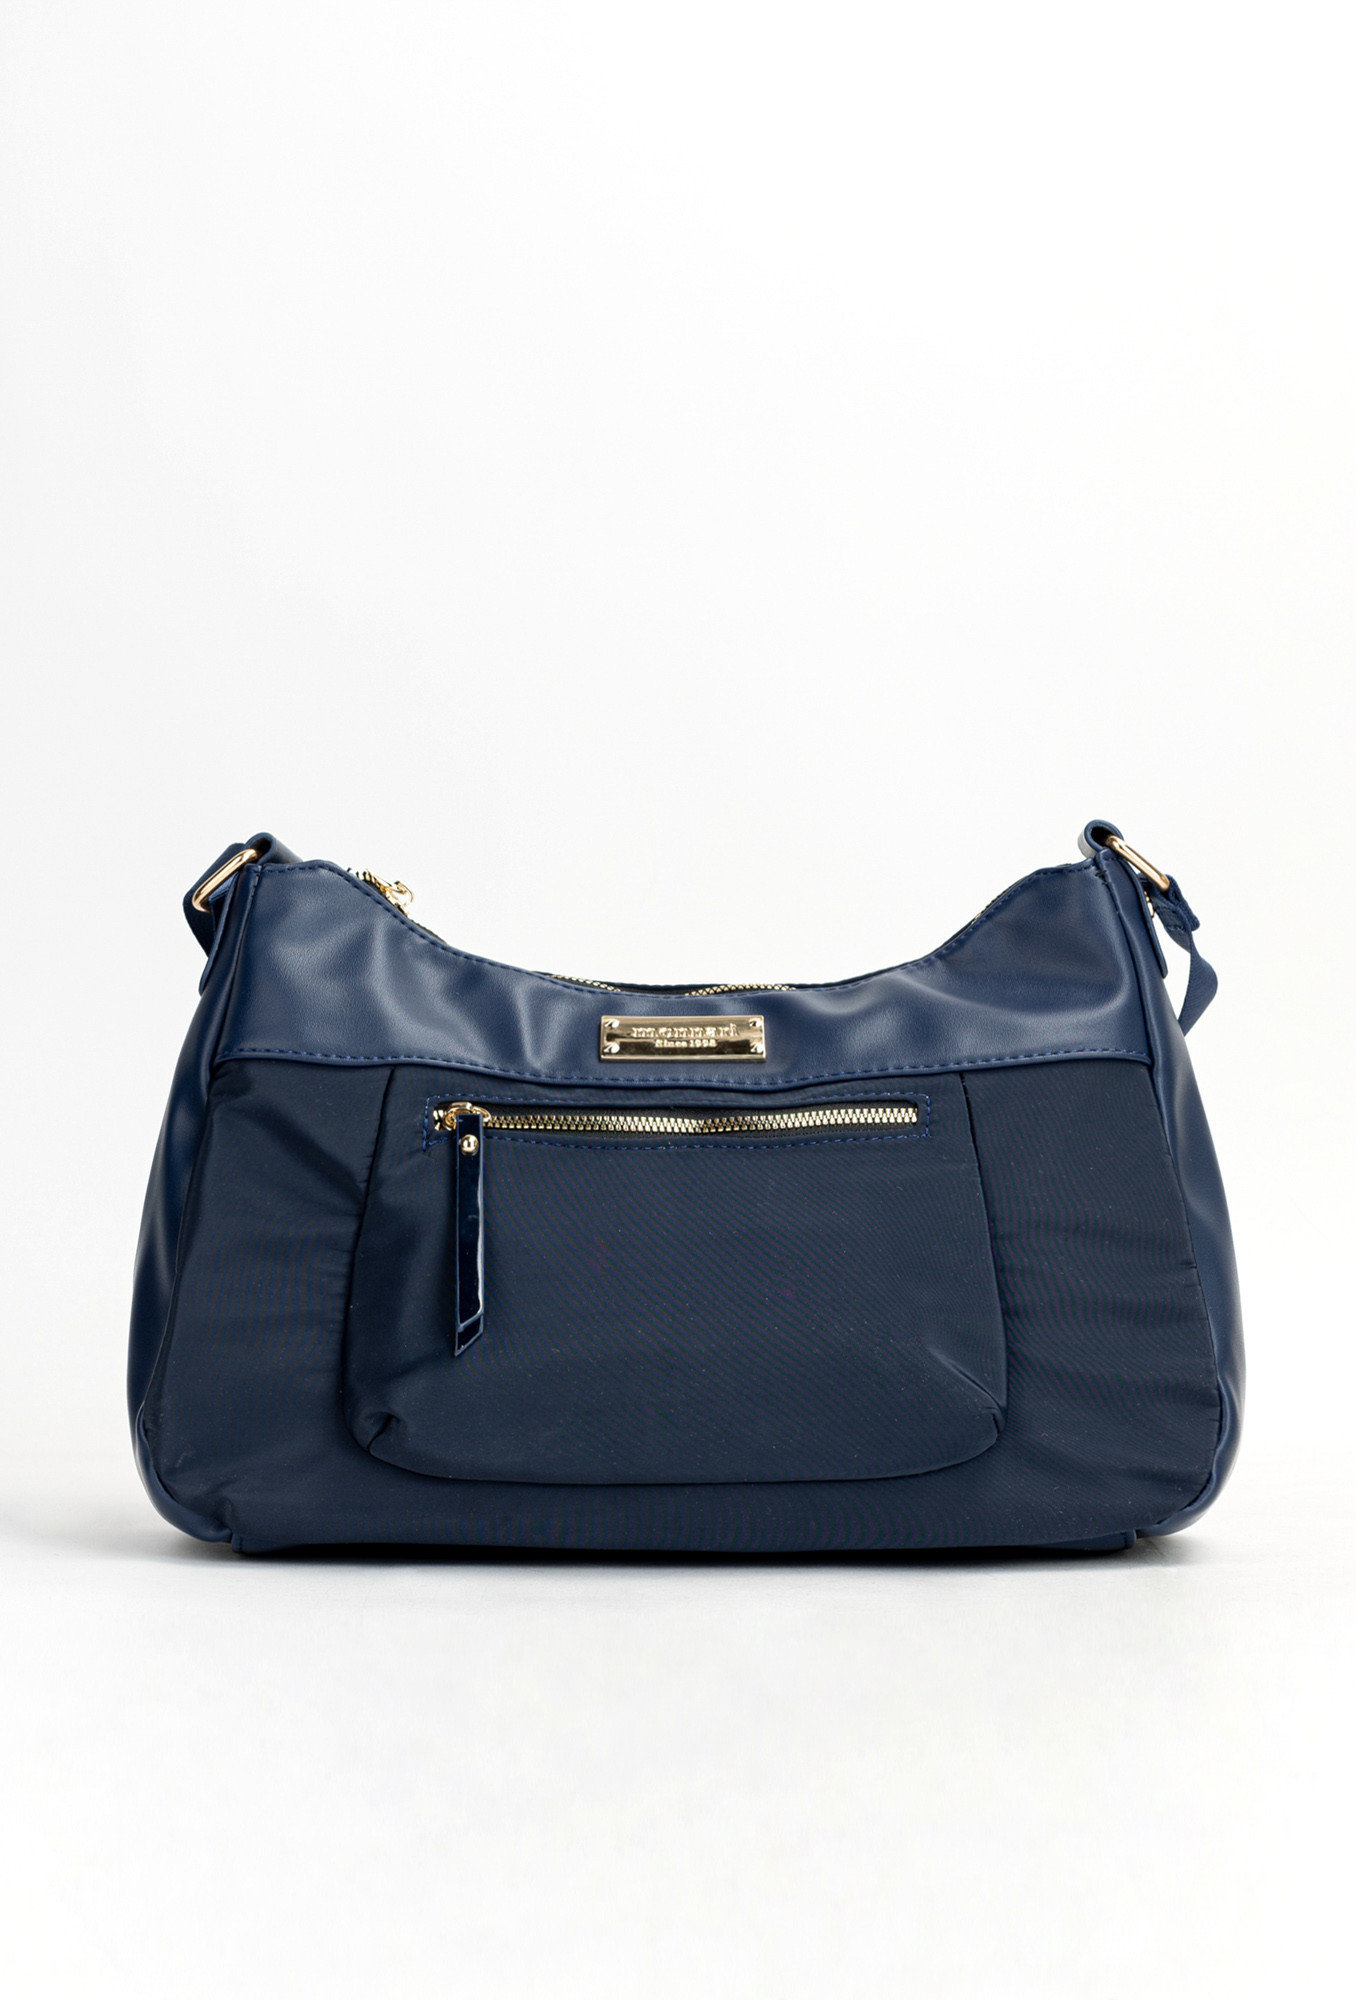 Monnari Bags Dámská kabelka s kapsami Navy Blue OS